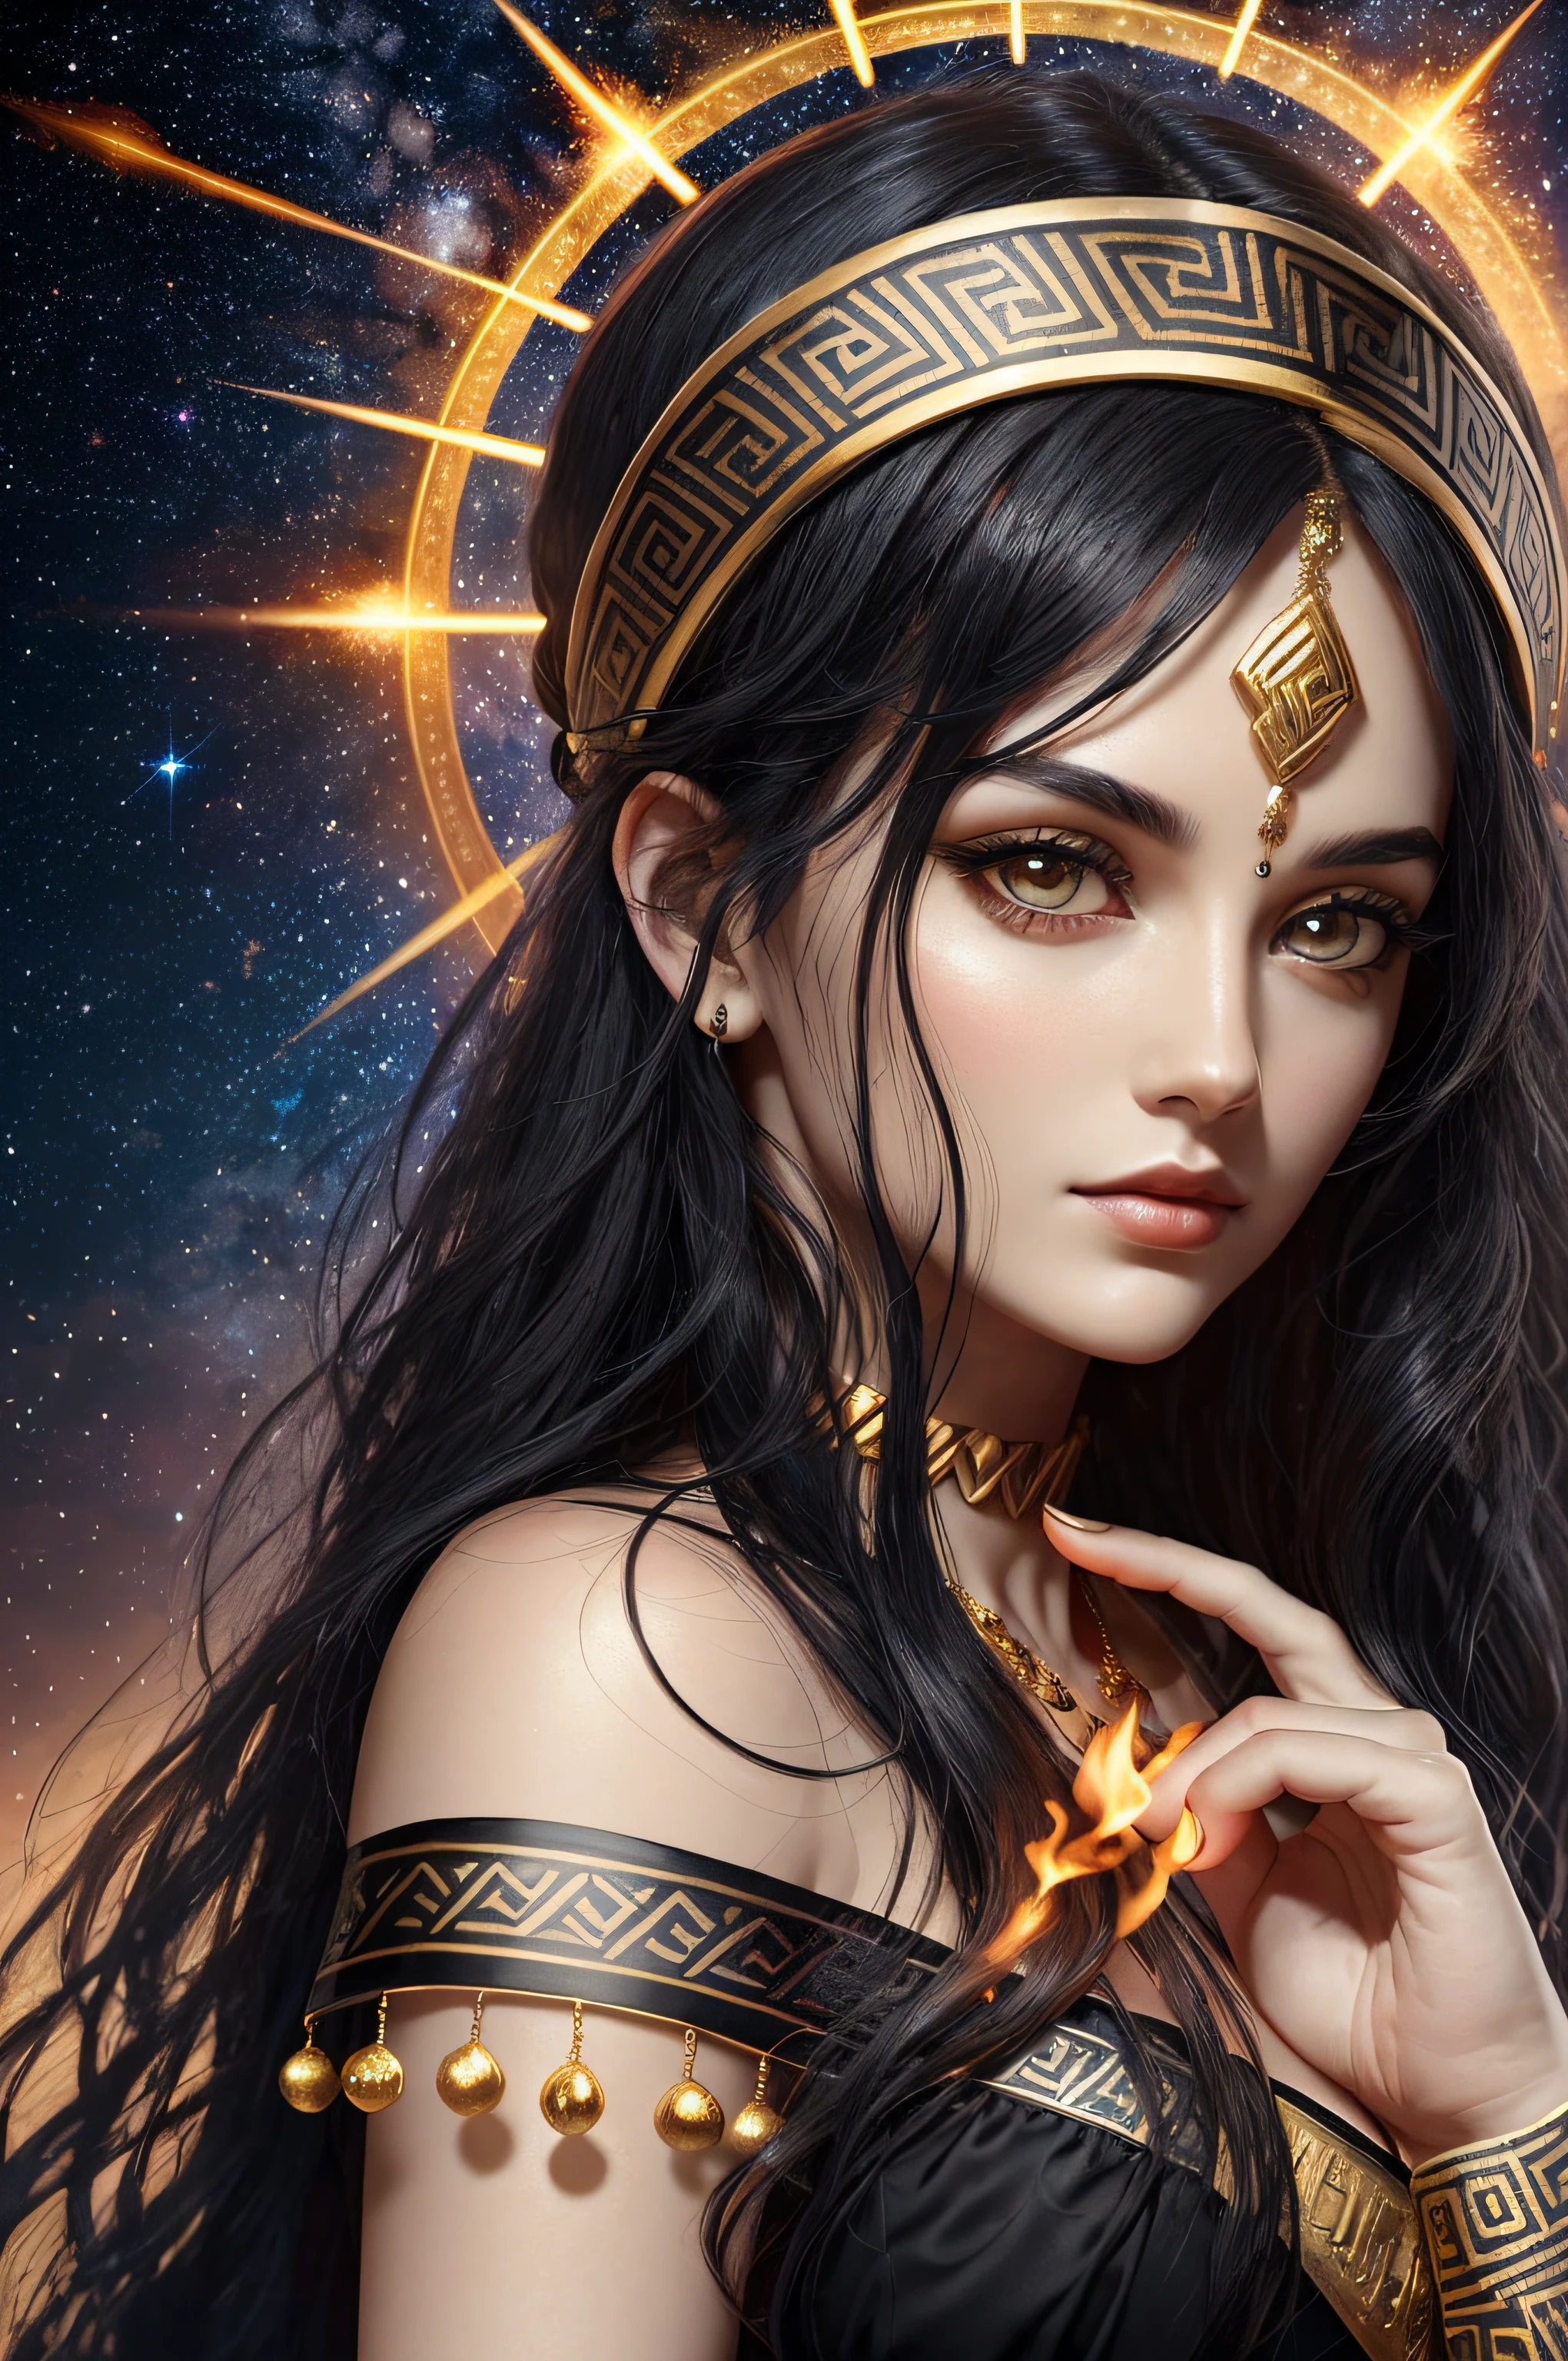 goddess of witchcraft 그리고 magic, ~와 함께 ((검은색 hair)) 그리고 ((검은 눈)), 피부가 희다, 착용하다 ((검은색)) greek toga ~와 함께 golden pattern, 횃불을 들고, ancient greek temple 그리고 stary night sky in background, 그리스 신화, 신비한, 사실적인, 슈퍼 고품질, 슈퍼 디테일, ultra accurate description of h그리고s, 걸작, 8K, HDR